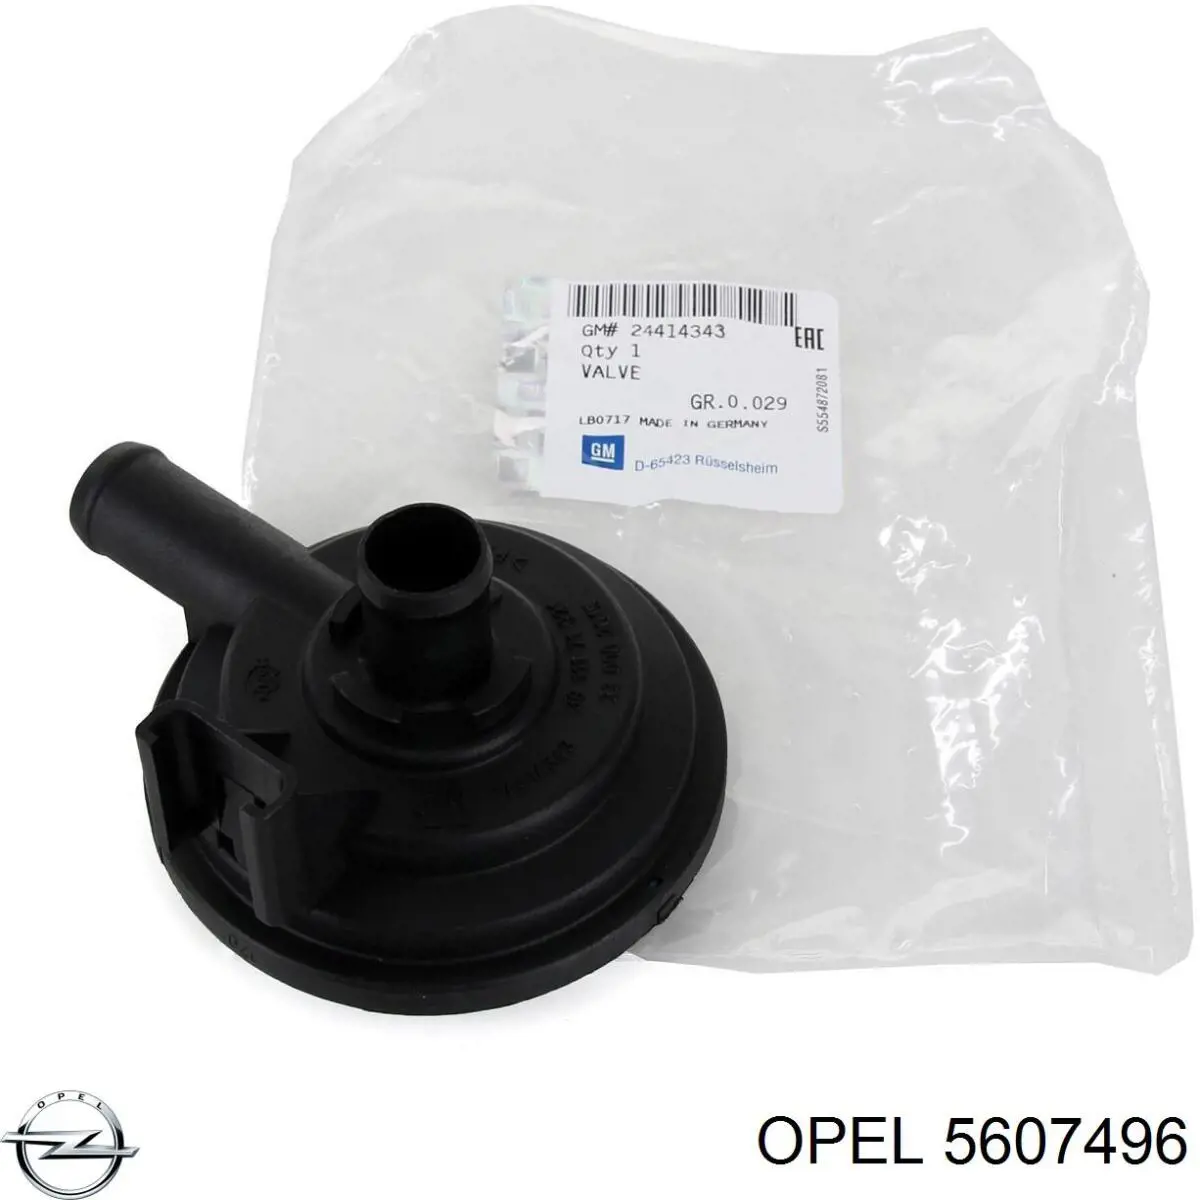 5607496 Opel válvula, ventilaciuón cárter